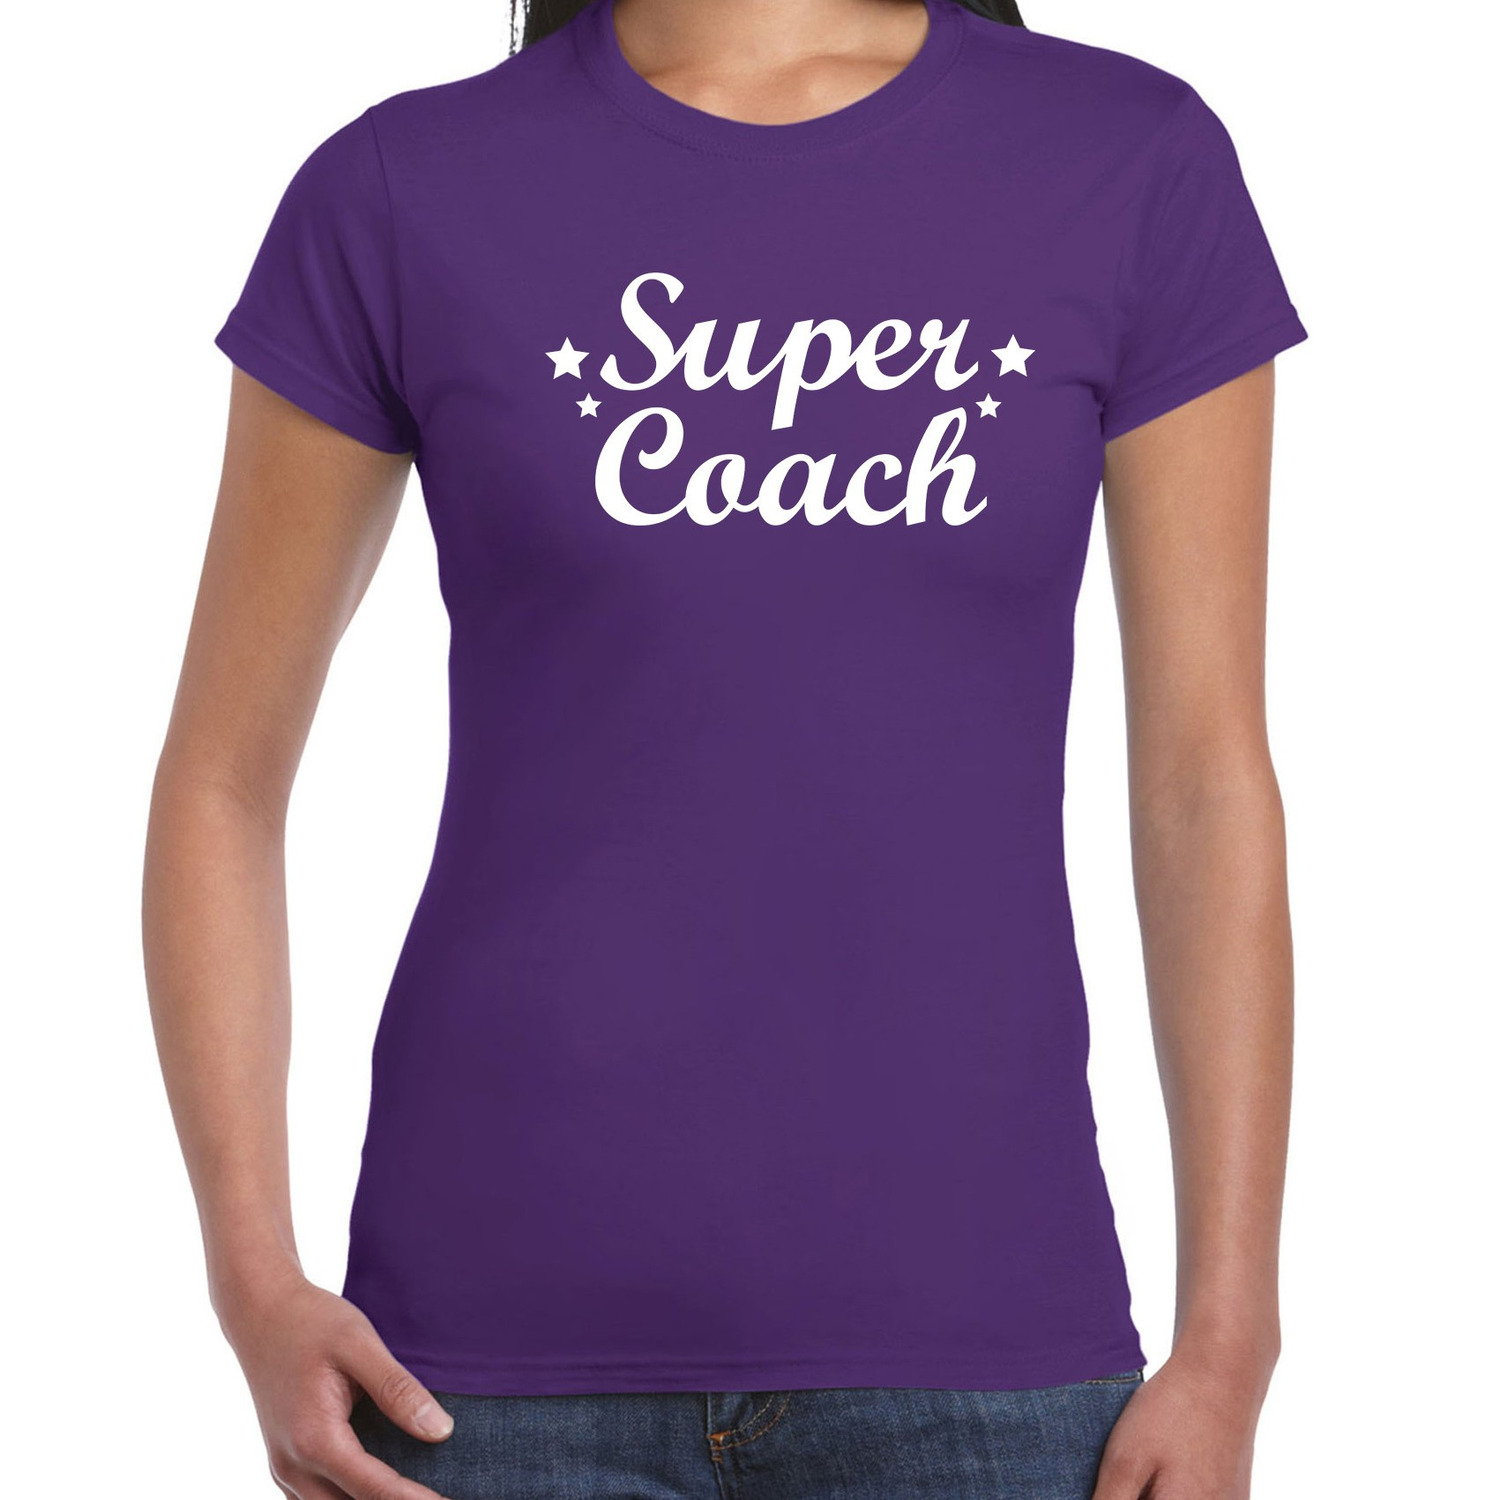 Super coach cadeau t-shirt paars voor dames